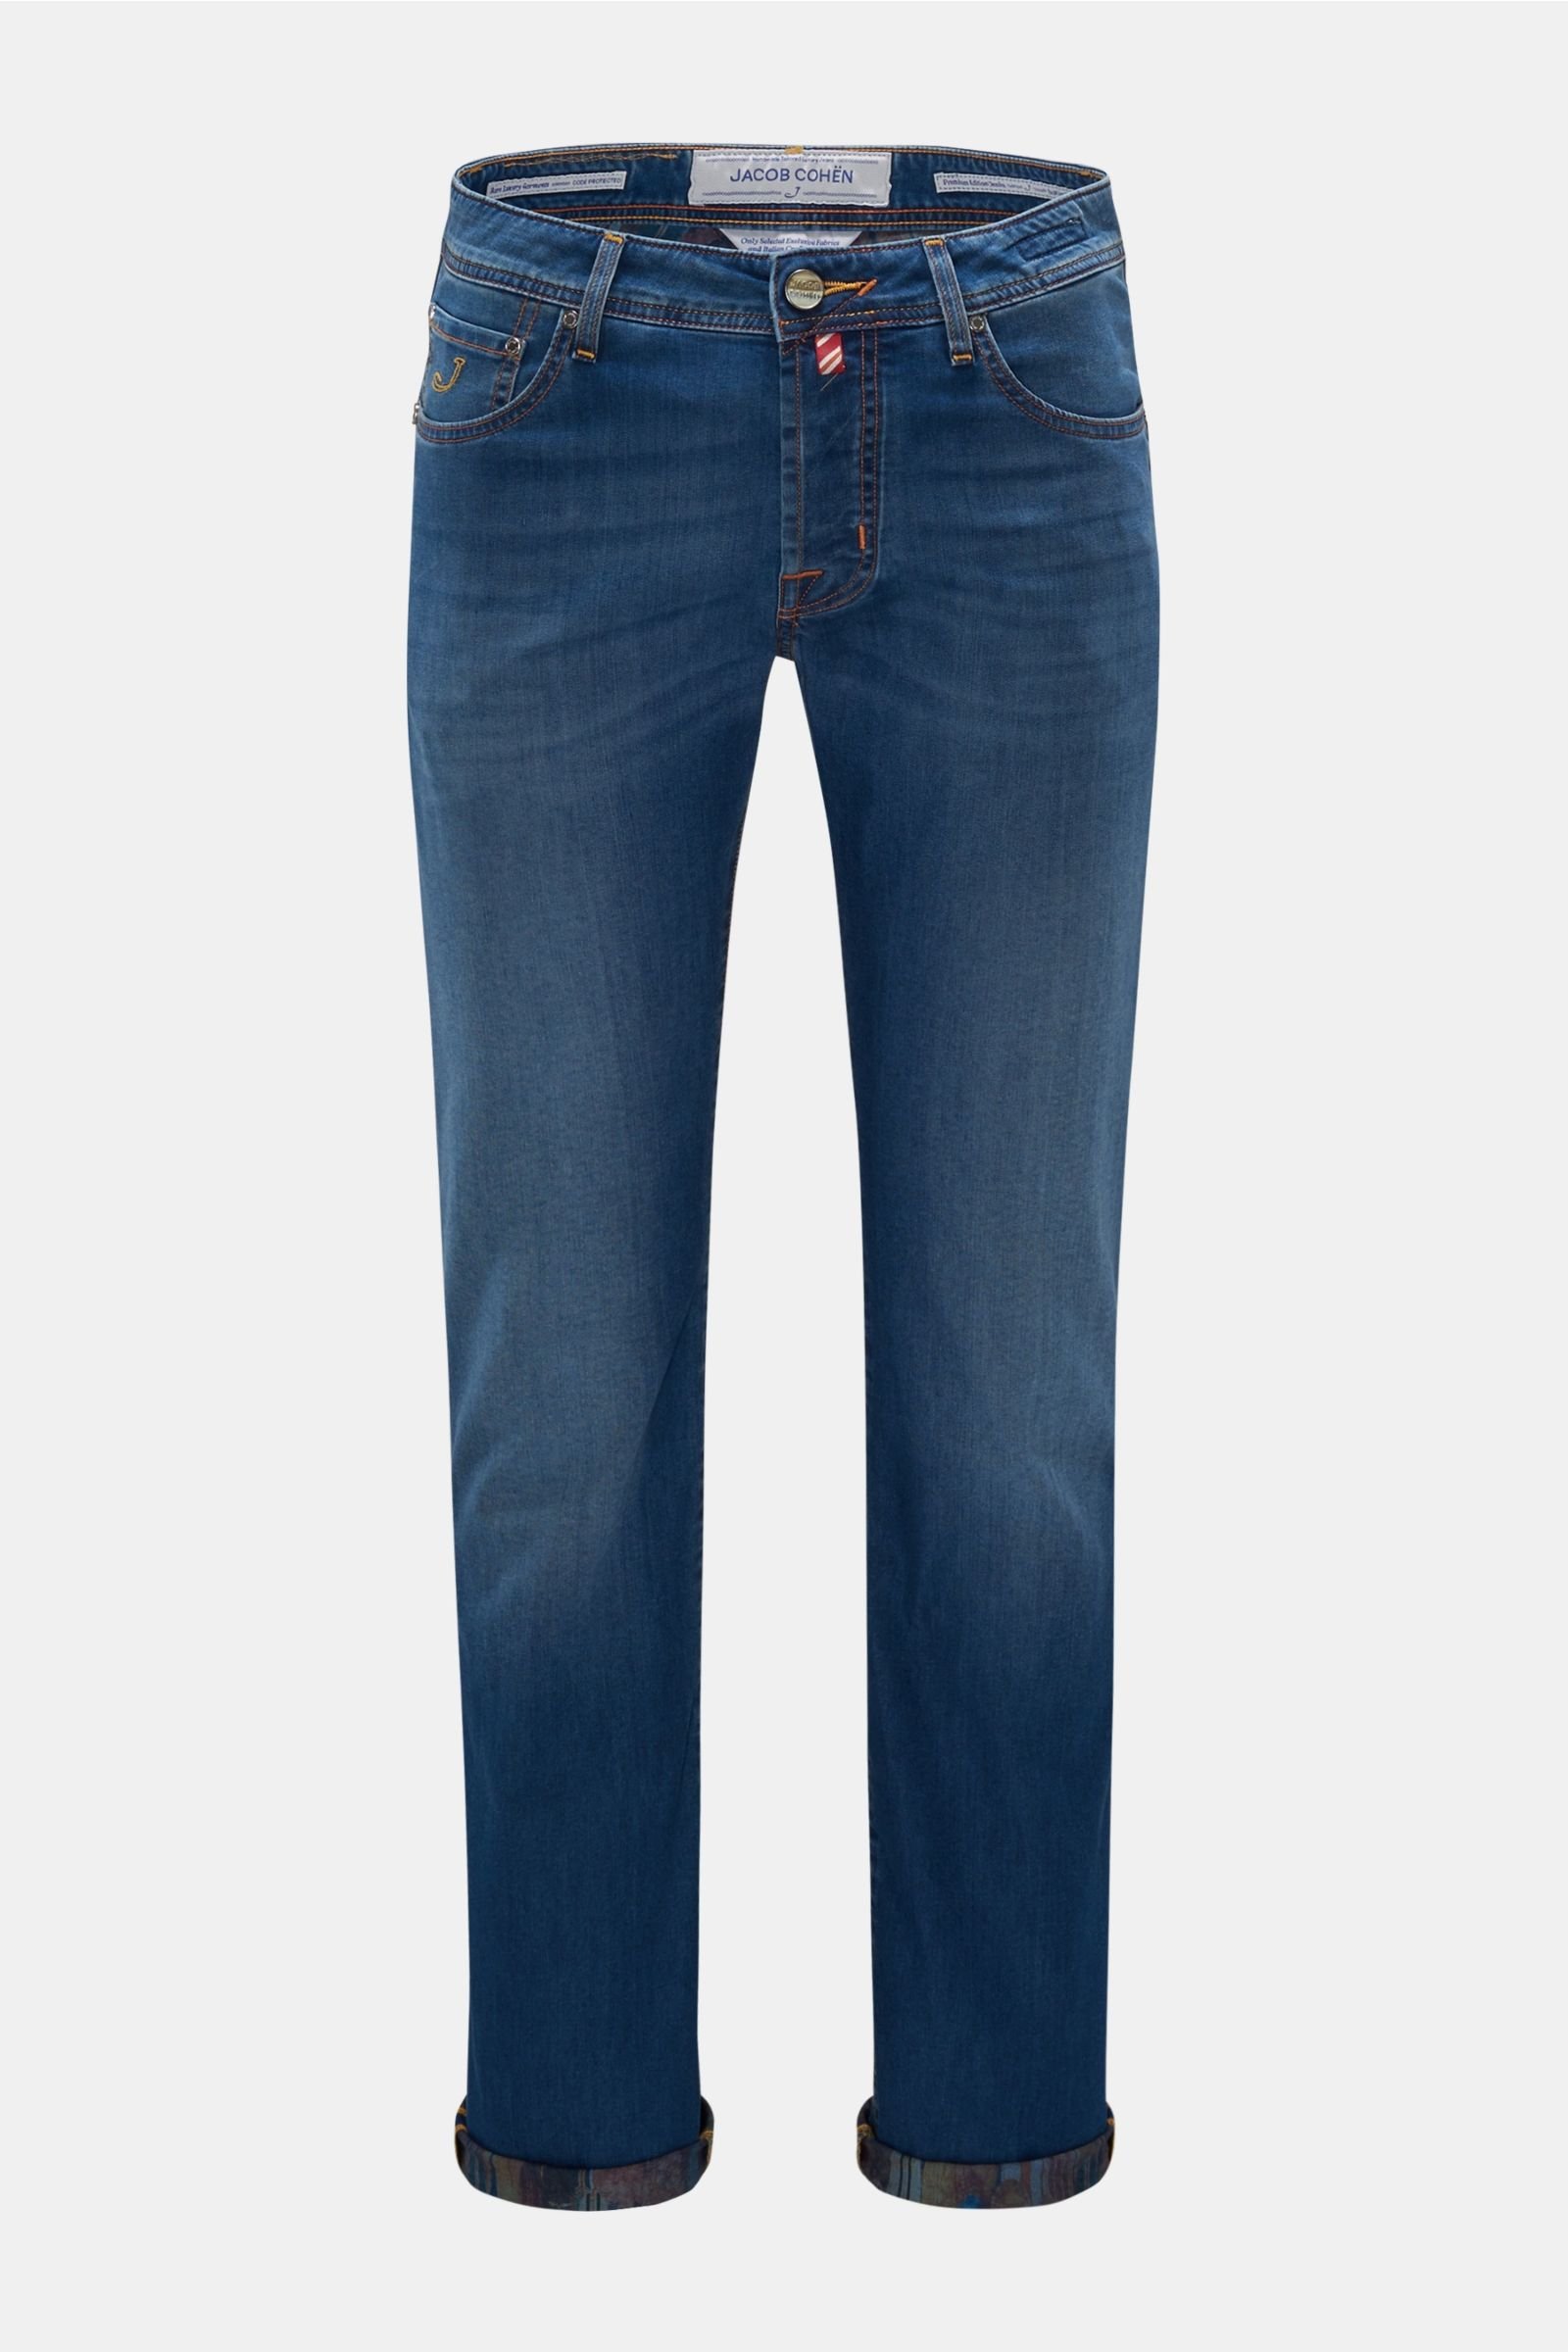 Jeans 'J620 Comfort Slim Fit' graublau